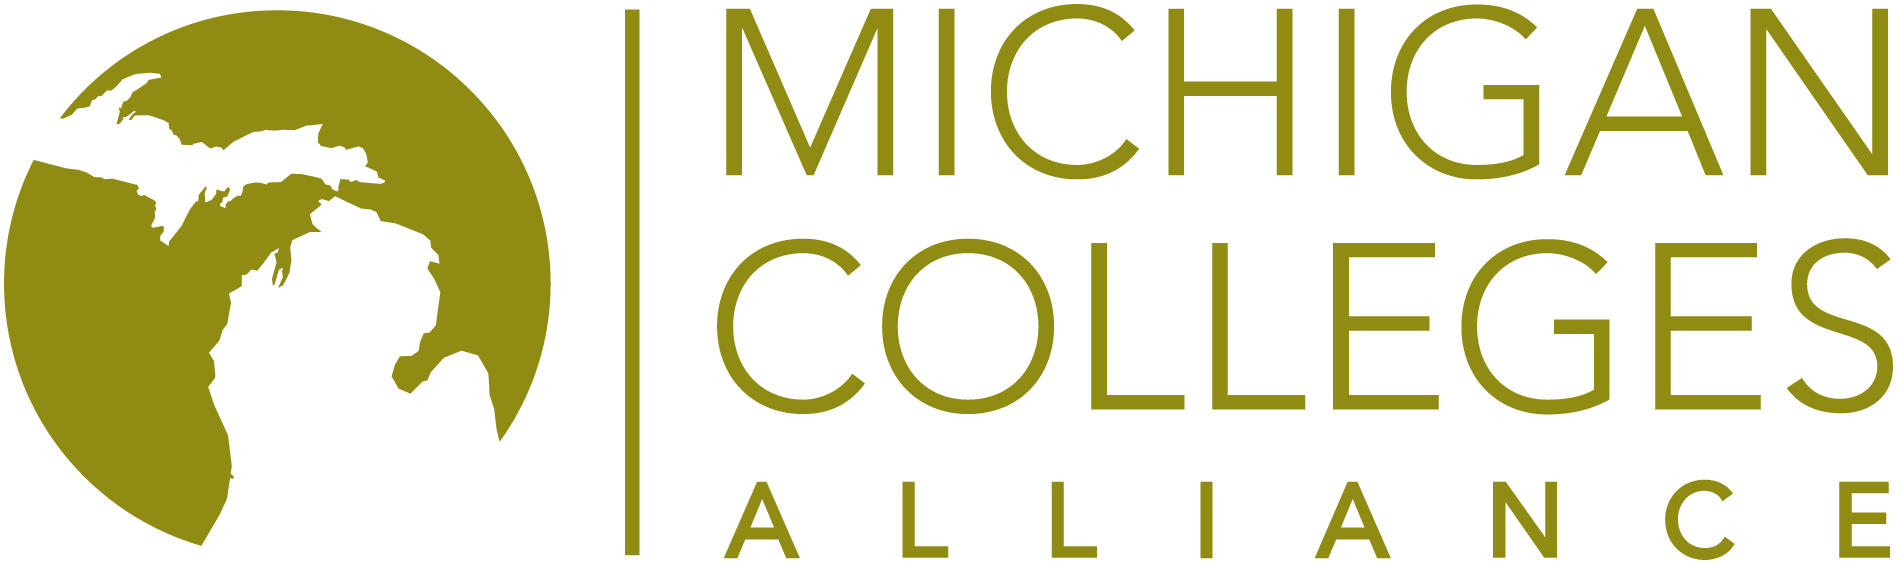 Michigan Colleges Alliance | Michigan's Top Private Colleges ...